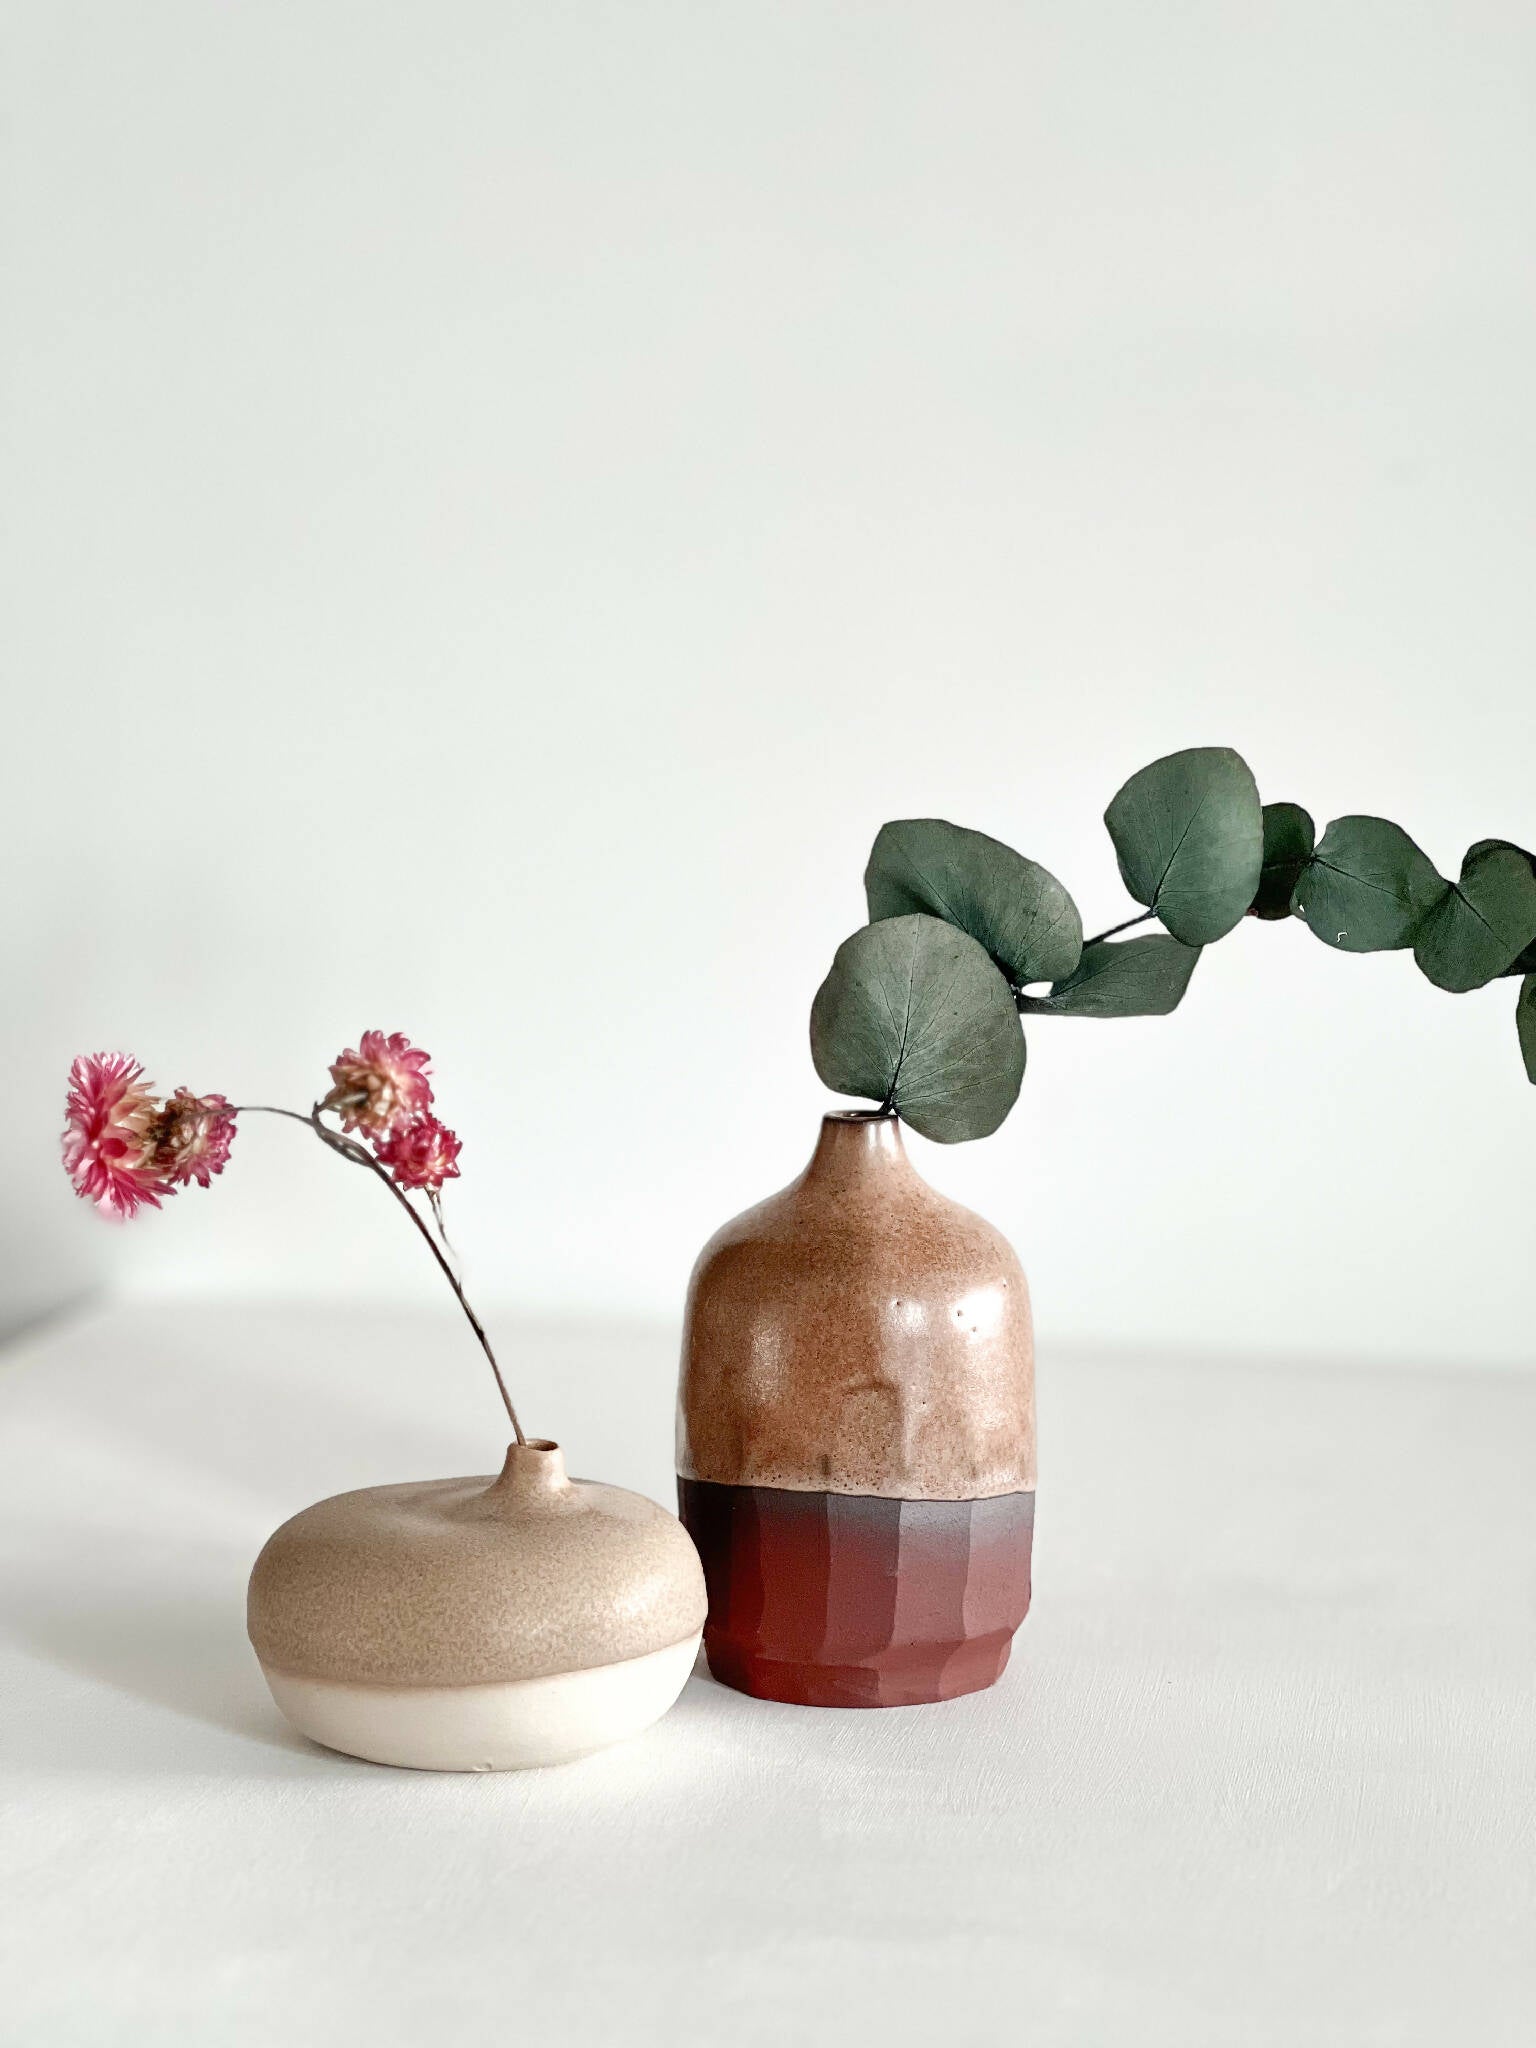 Soliflore vase ceramique fait-main artisanat francais